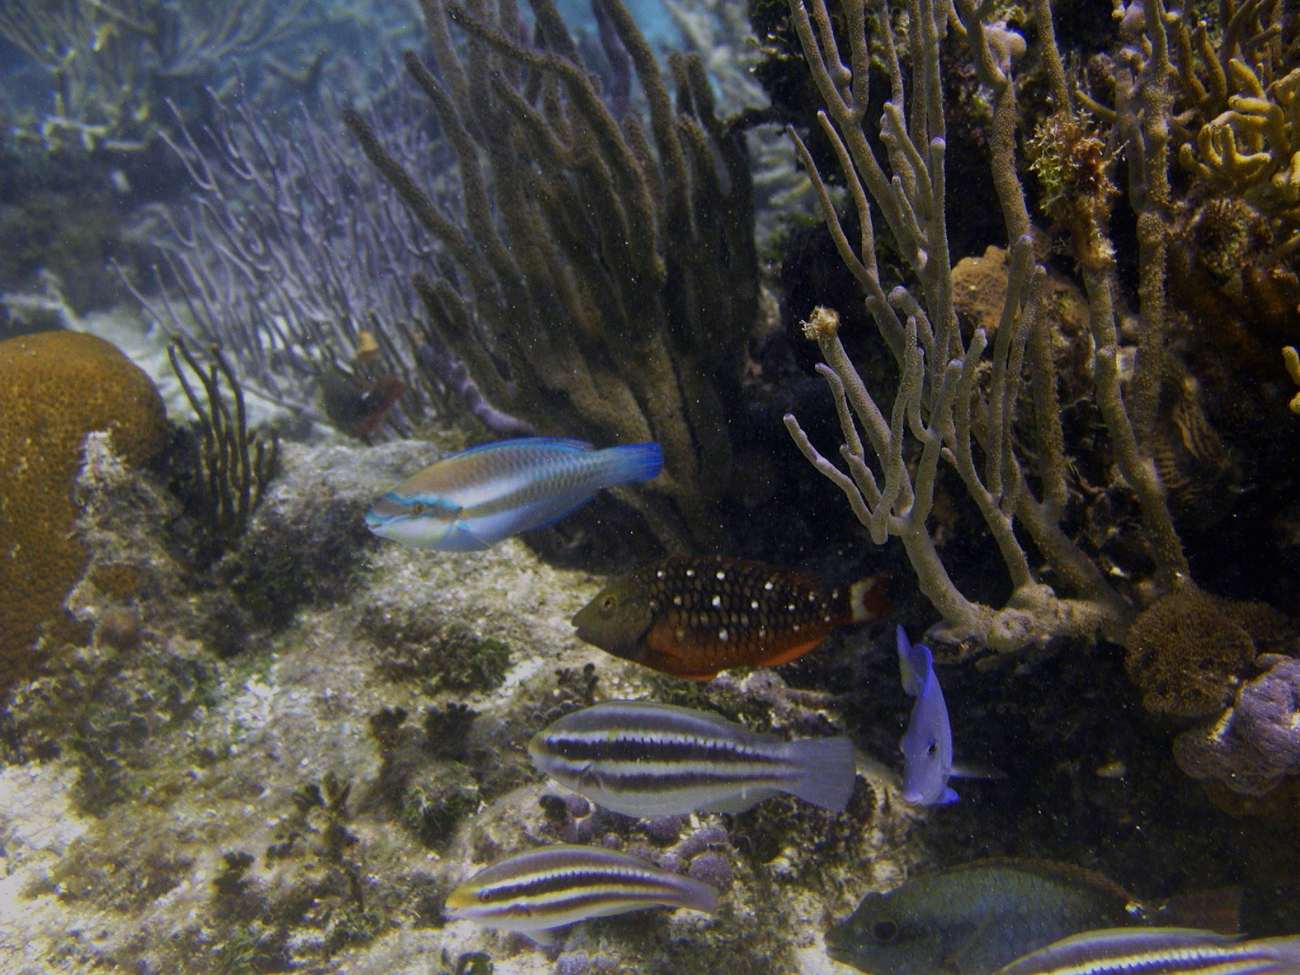 Striped parrotfish (Scarus iseri)